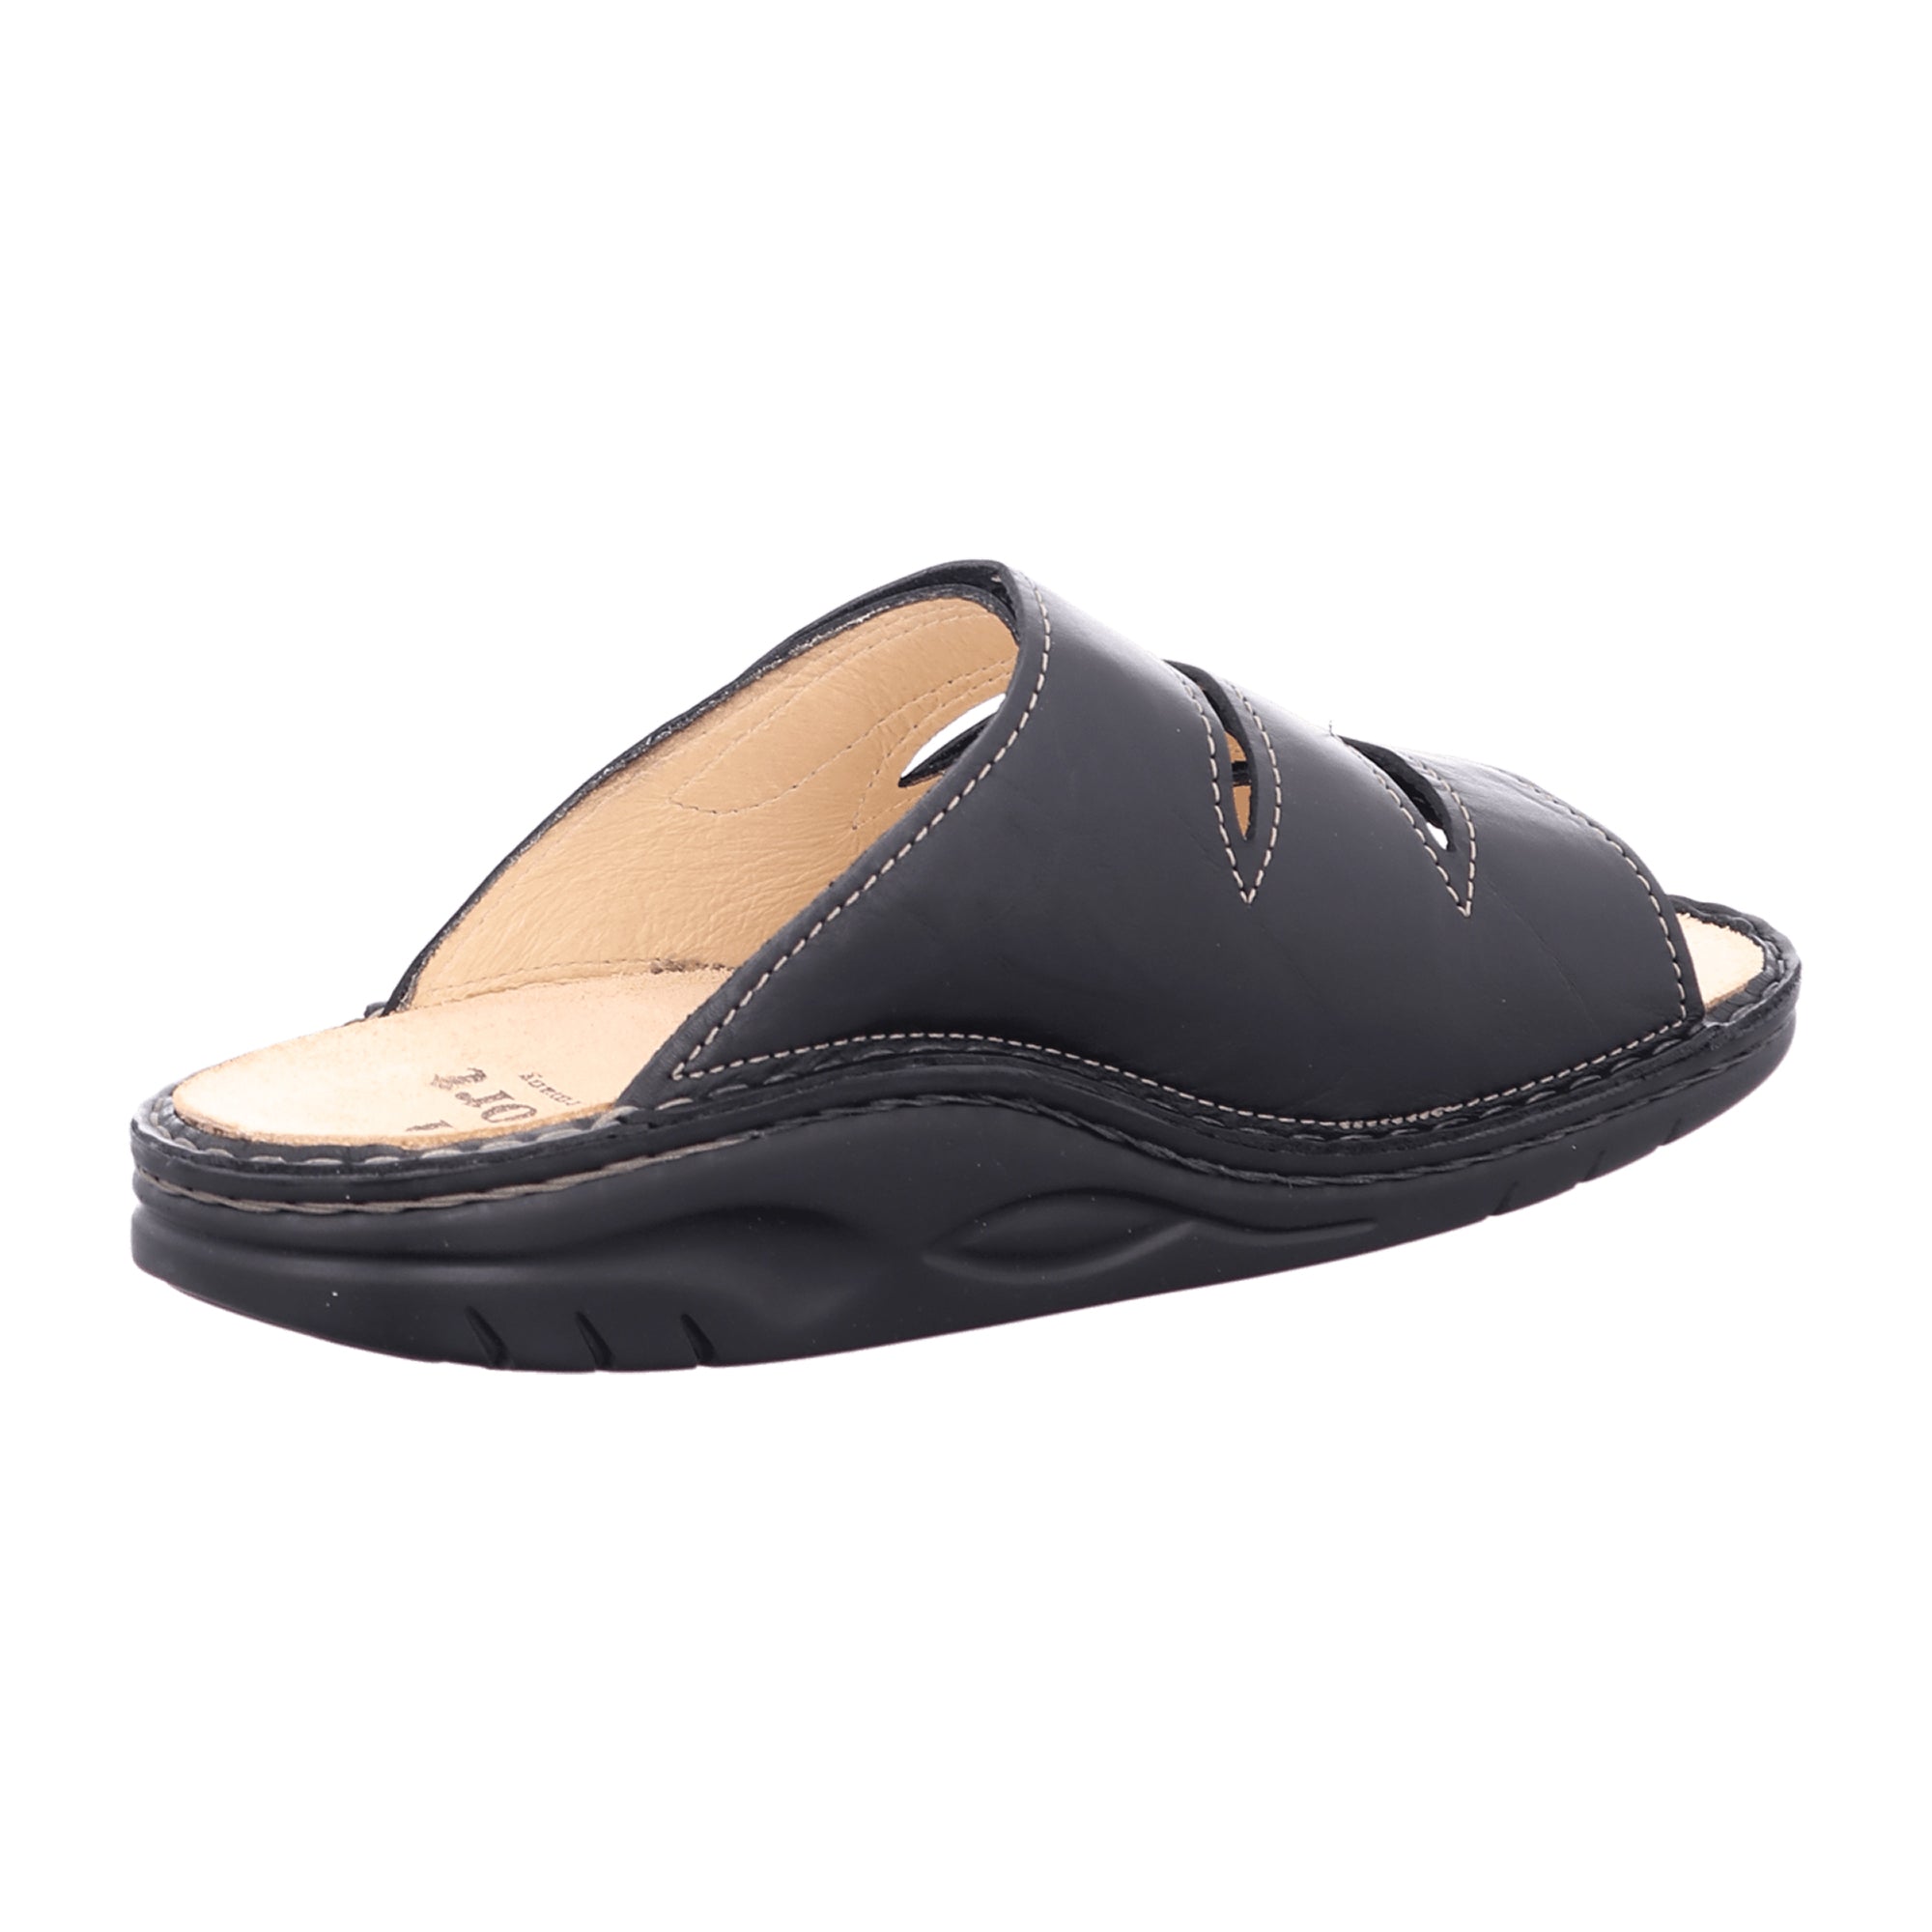 Finn Comfort Andros Women's Comfort Sandals, Black – Stylish & Durable